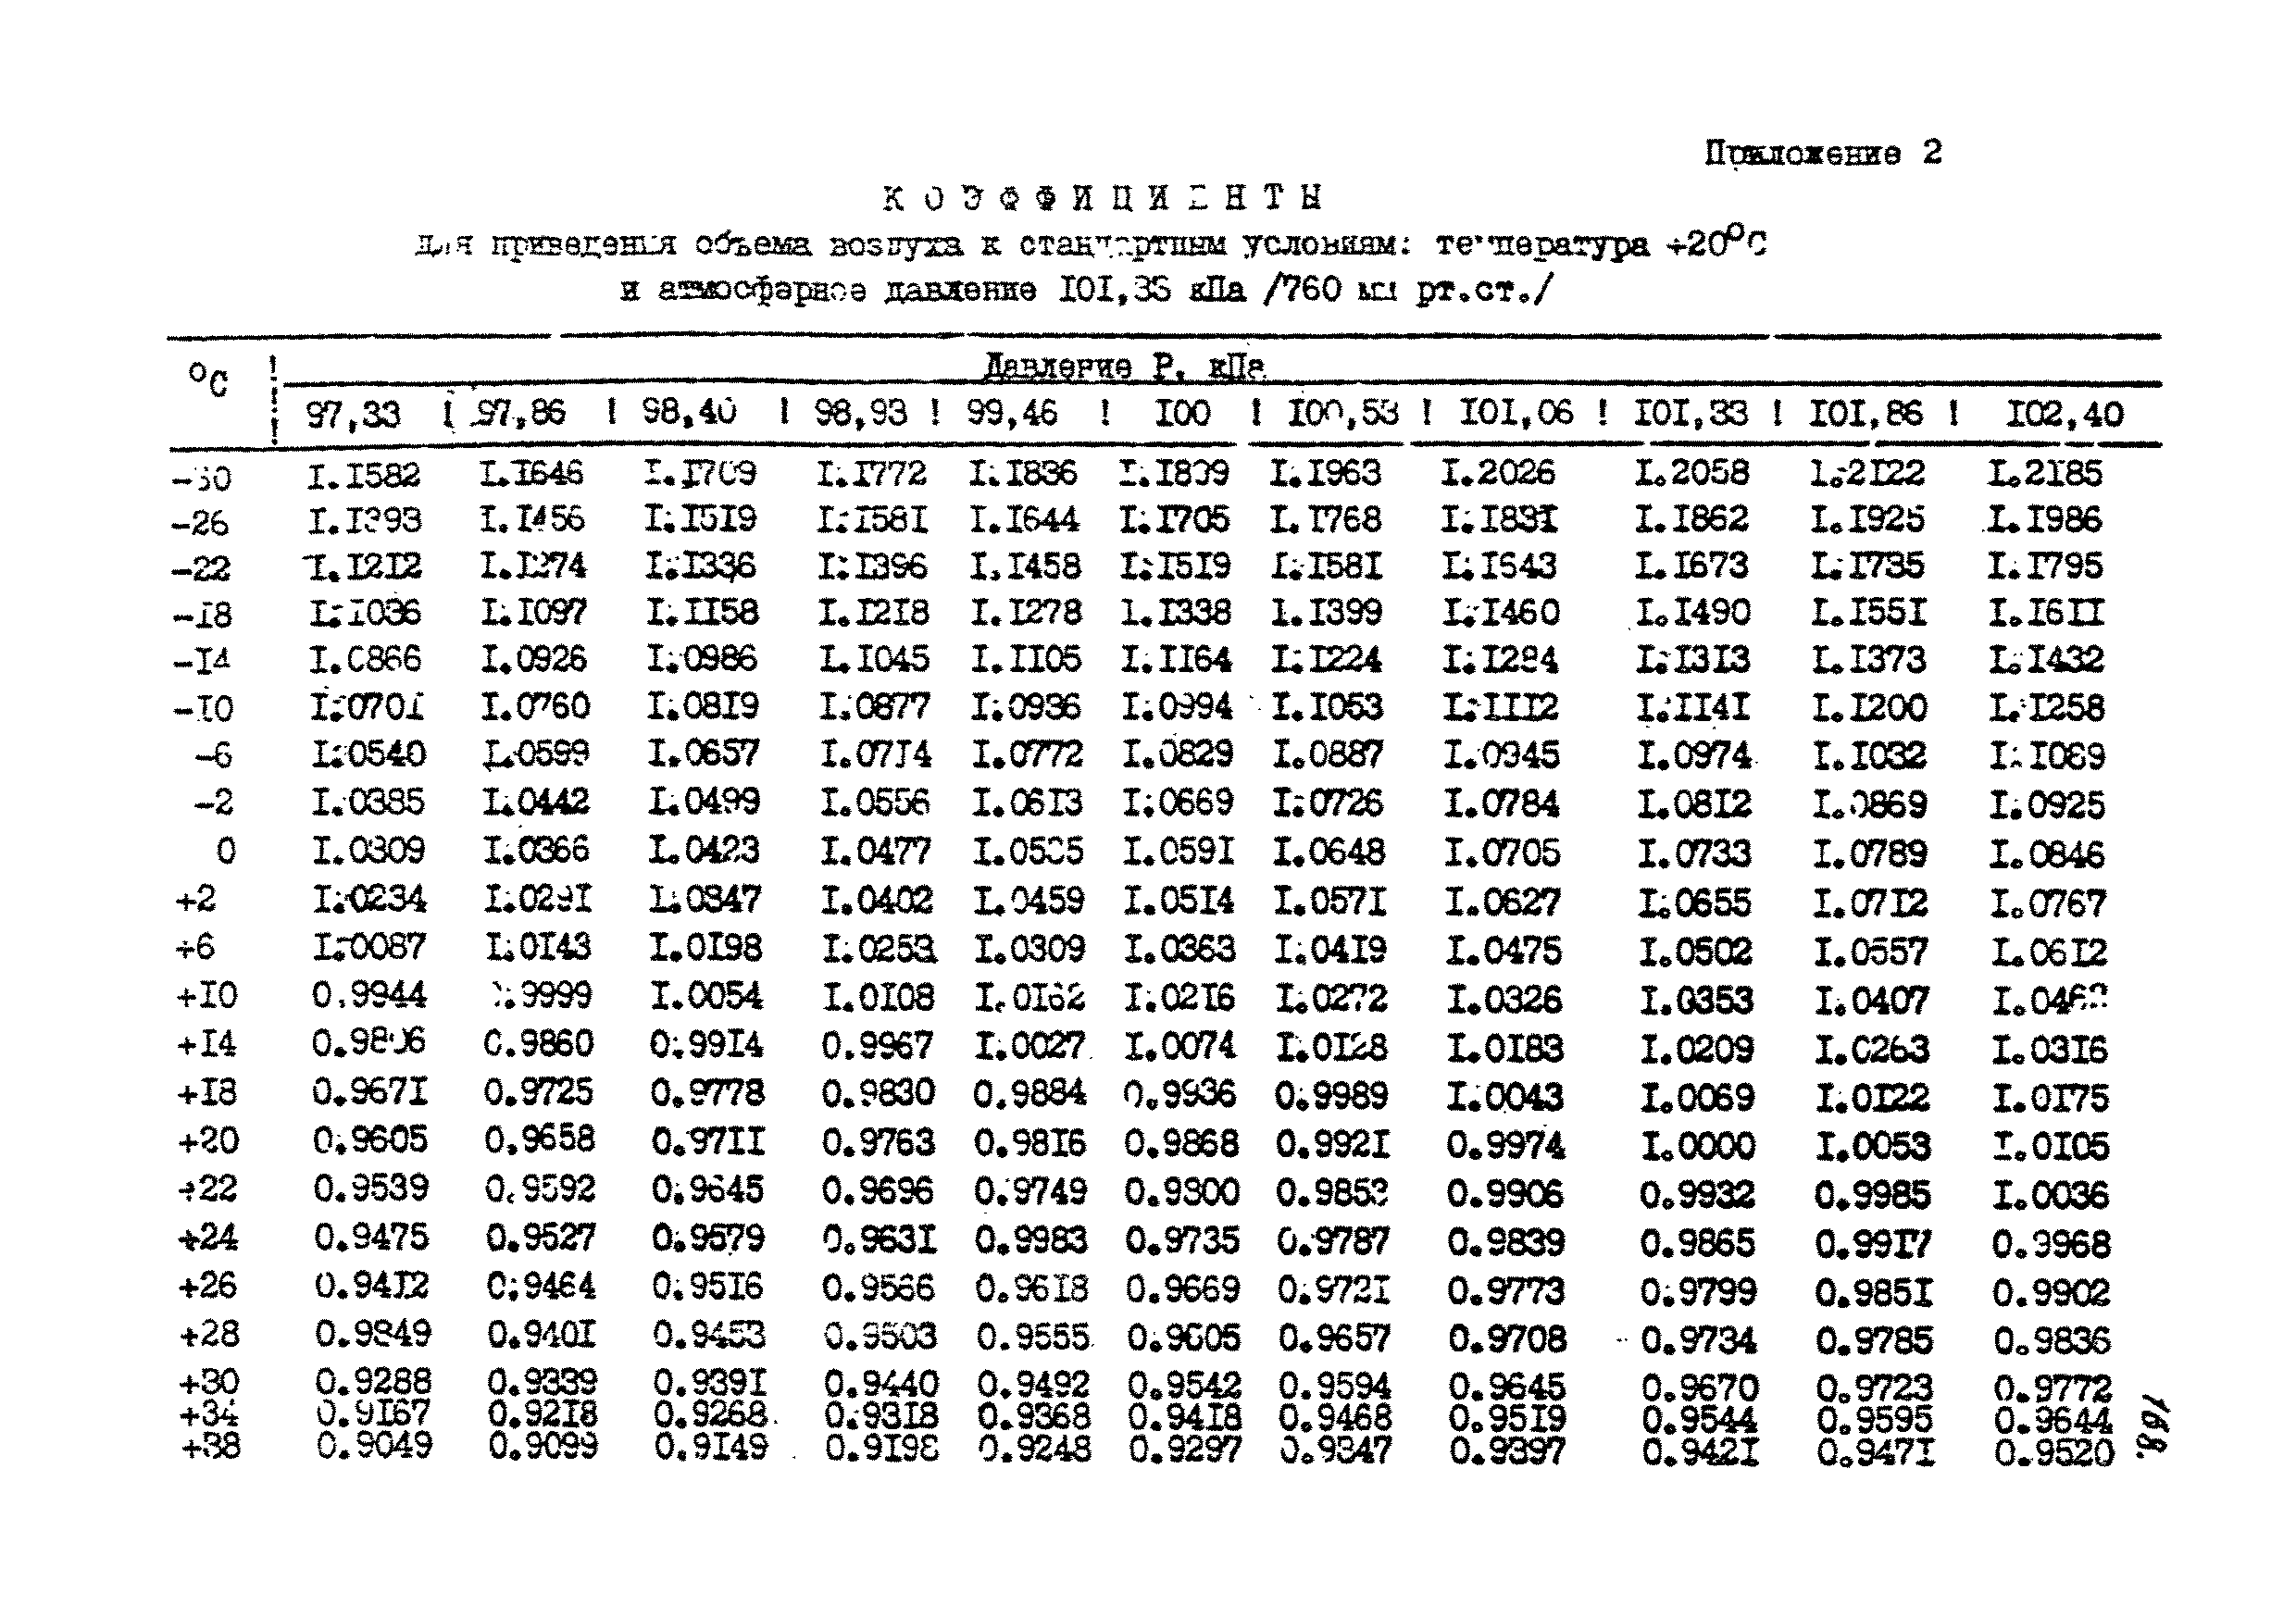 МУ 2766-83